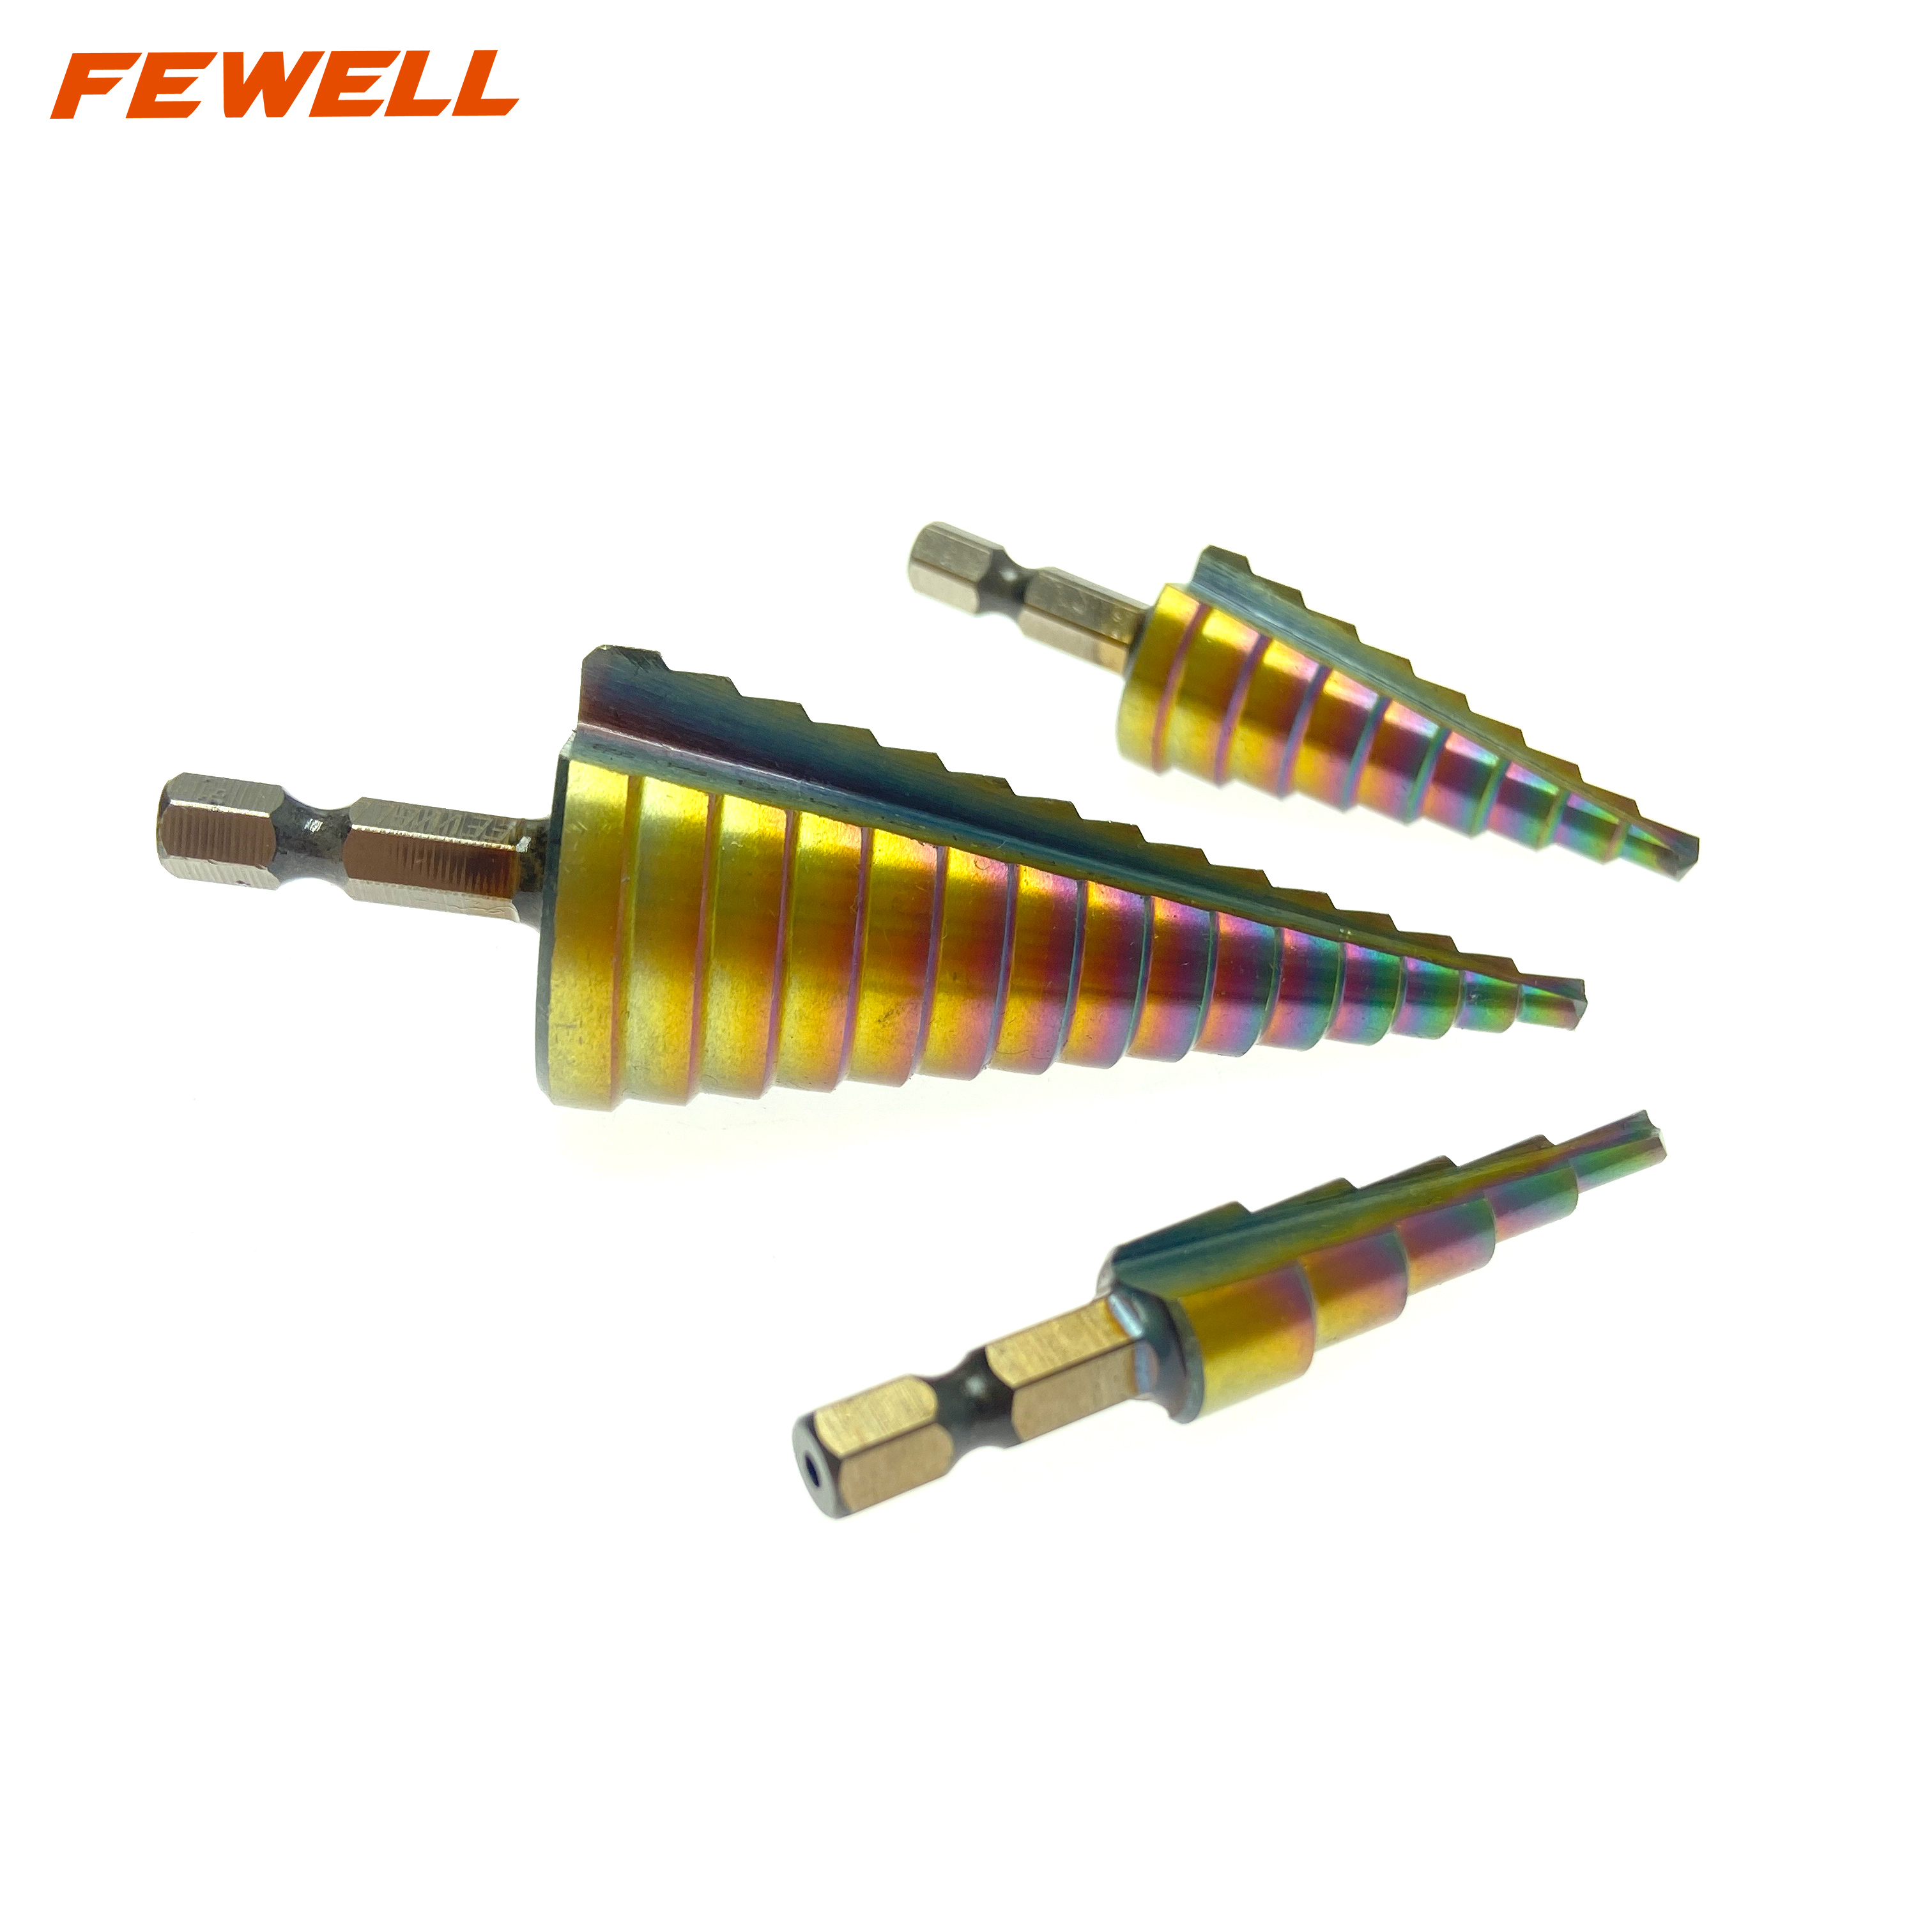 3 ADET 4-12mm 4-20mm 4-32mm HSS 6542 Altıgen Şaft Elektrikli El Aletleri spiral flüt Titanyum Adım Matkap Uçları Metal Sondaj için